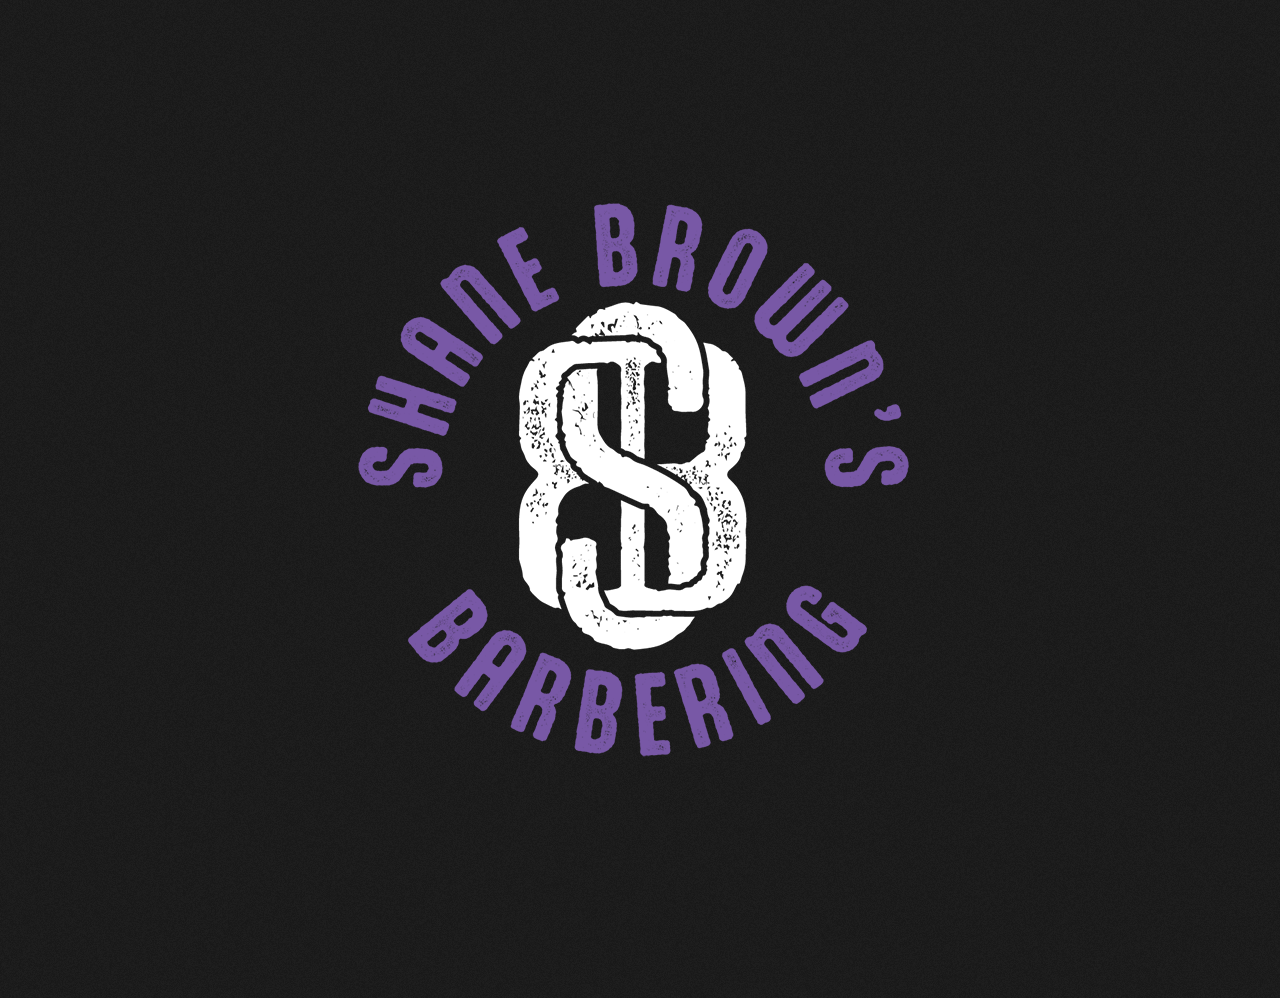 Logo Design - Shane Browns Barbering